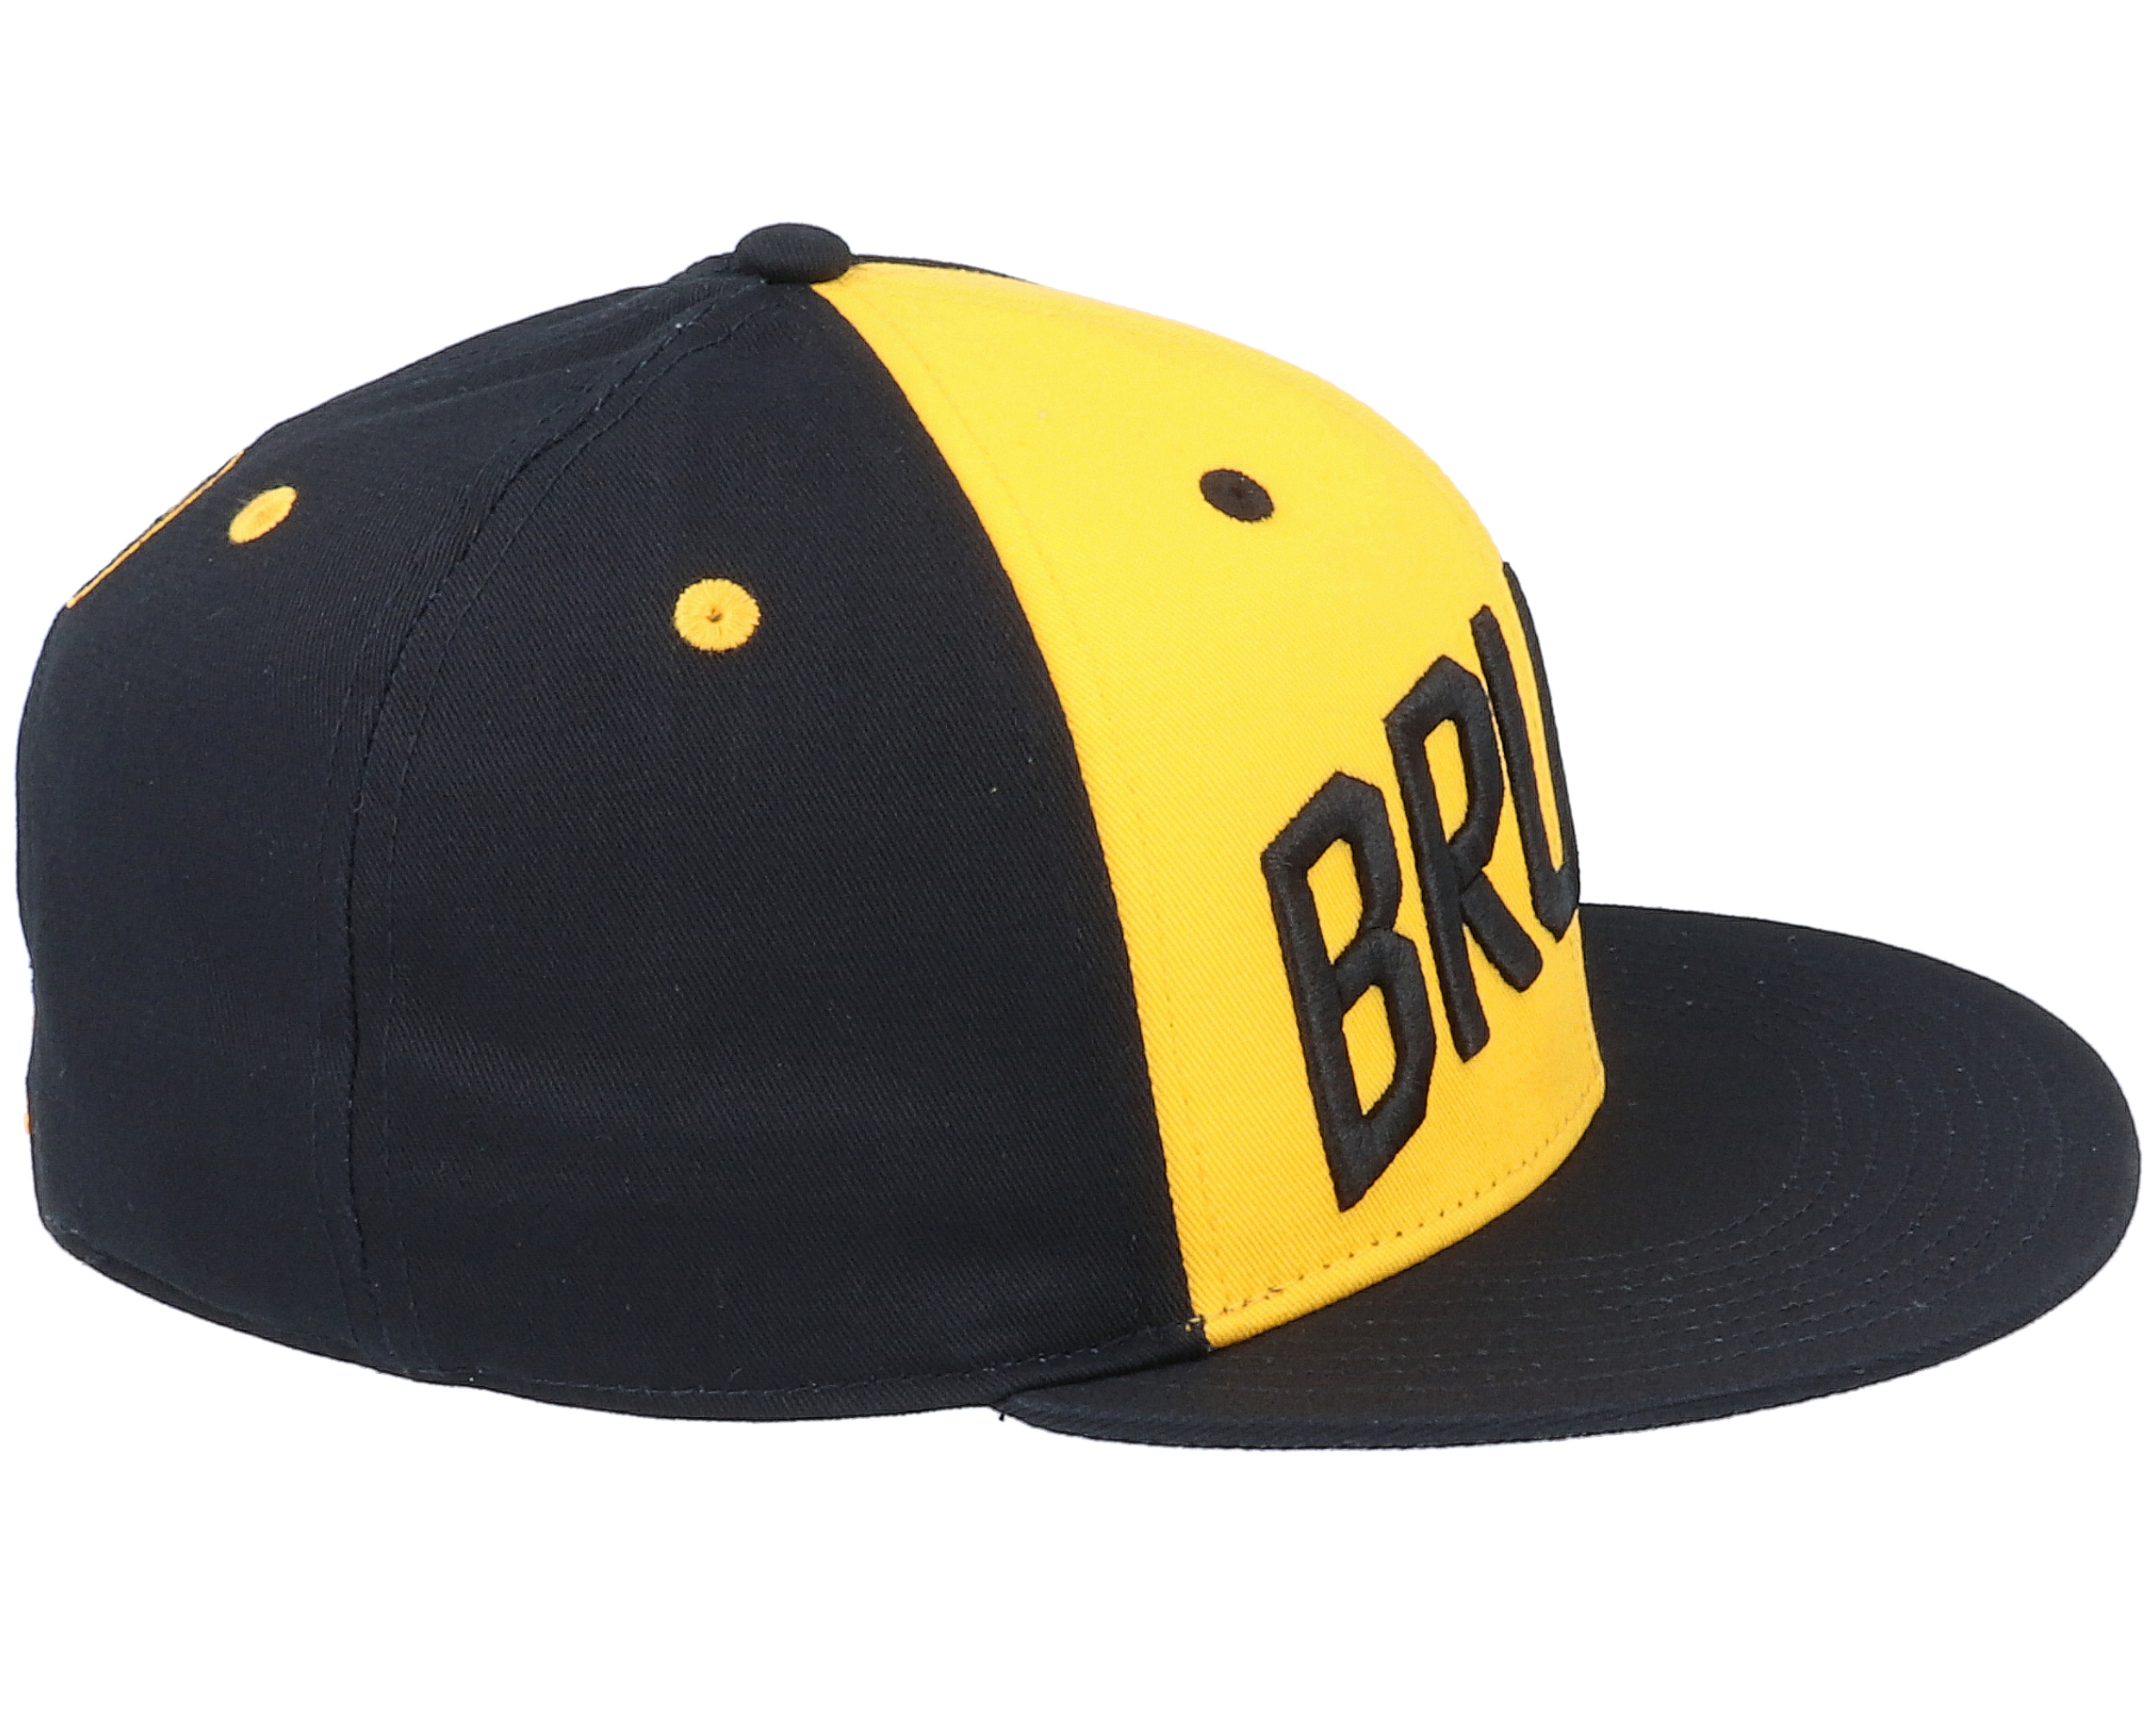 Boston Bruins Flat Brim Yellow/Black Snapback - Adidas caps ...